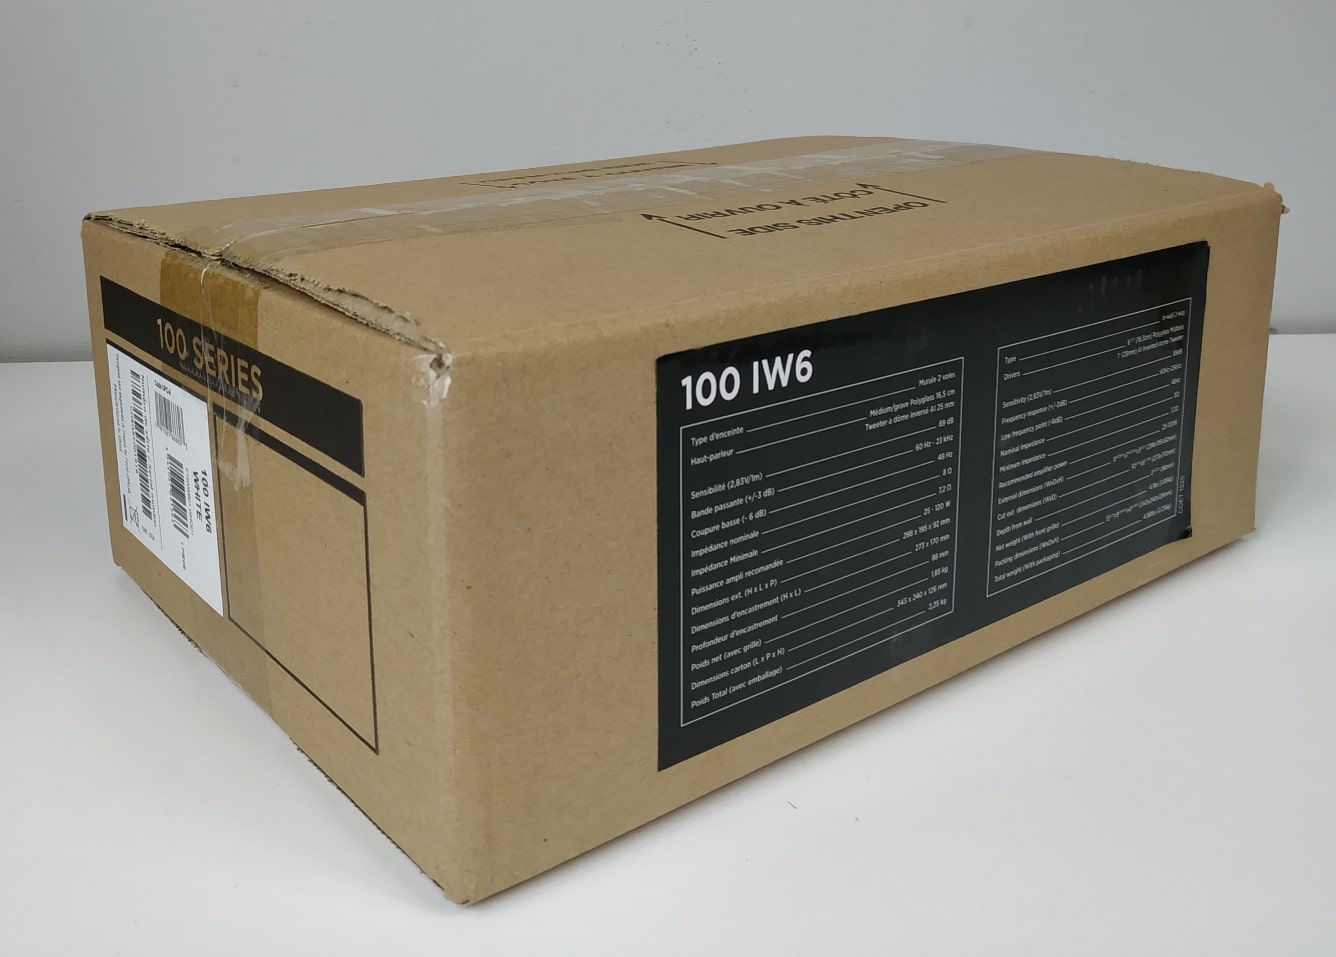 Focal 100 IW6 box